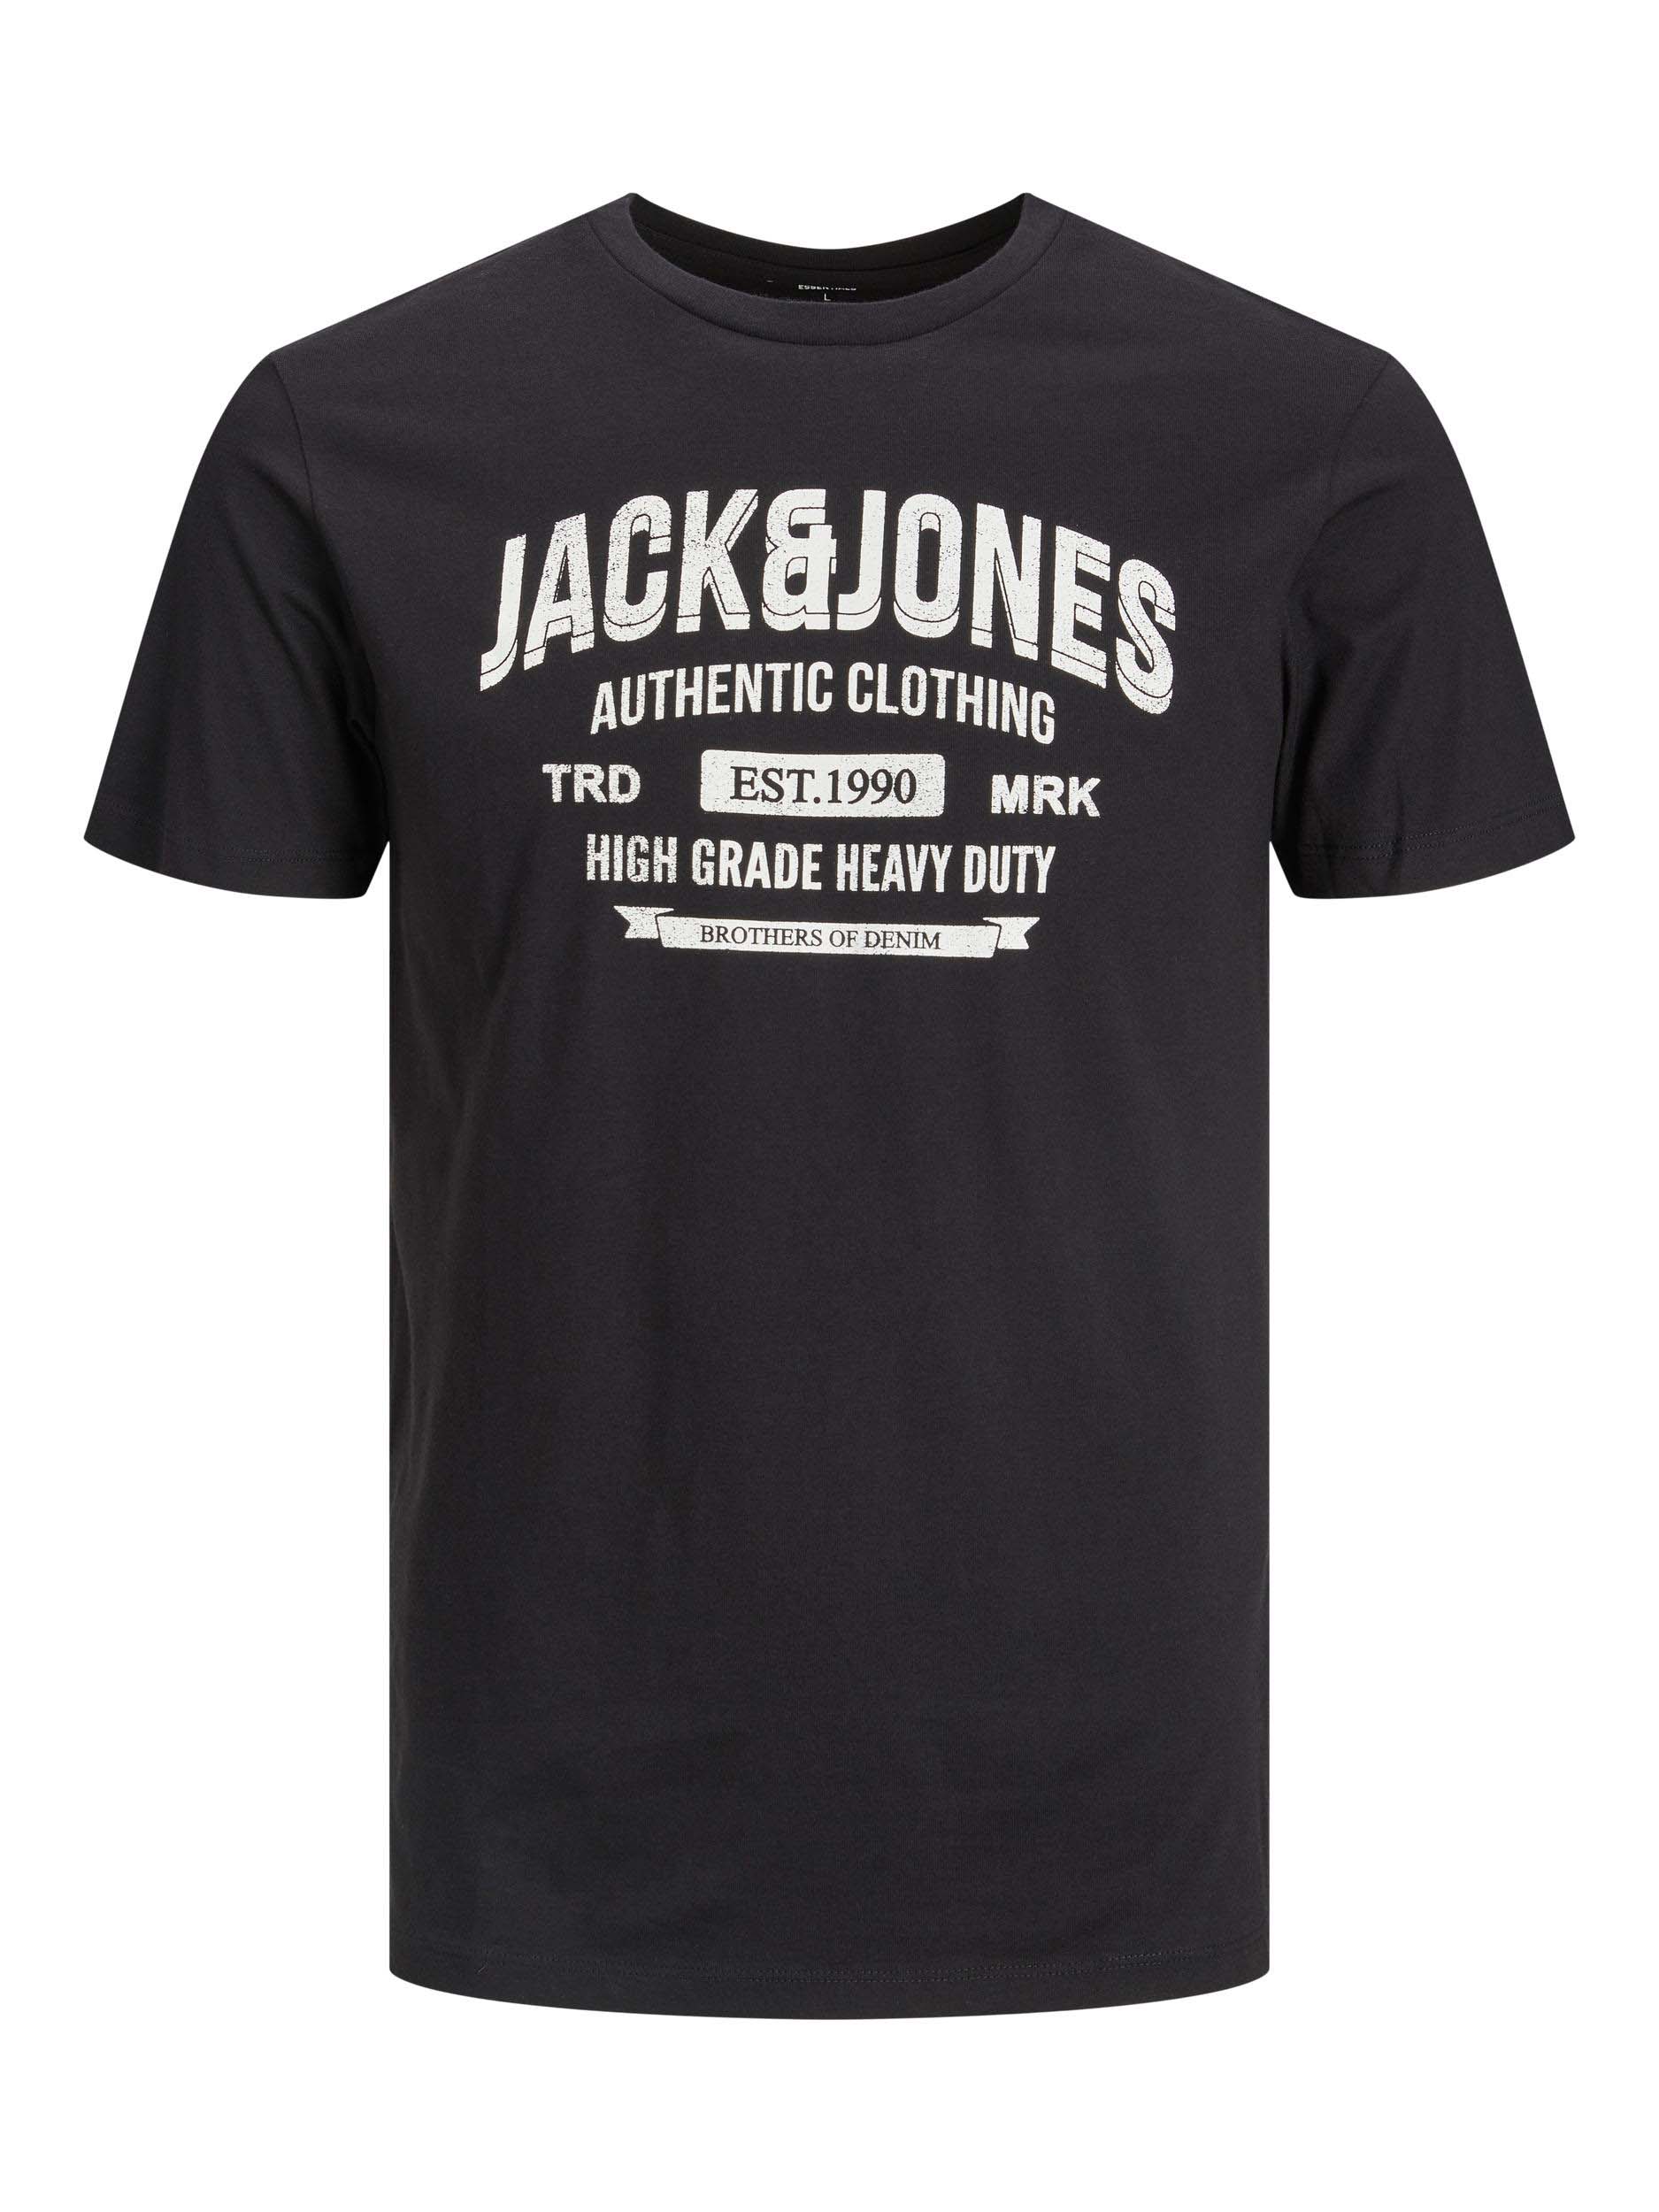 JACK & JONES Big & Tall Black 'Authentic Clothing' Logo Printed T-Shirt | BadRhino 2